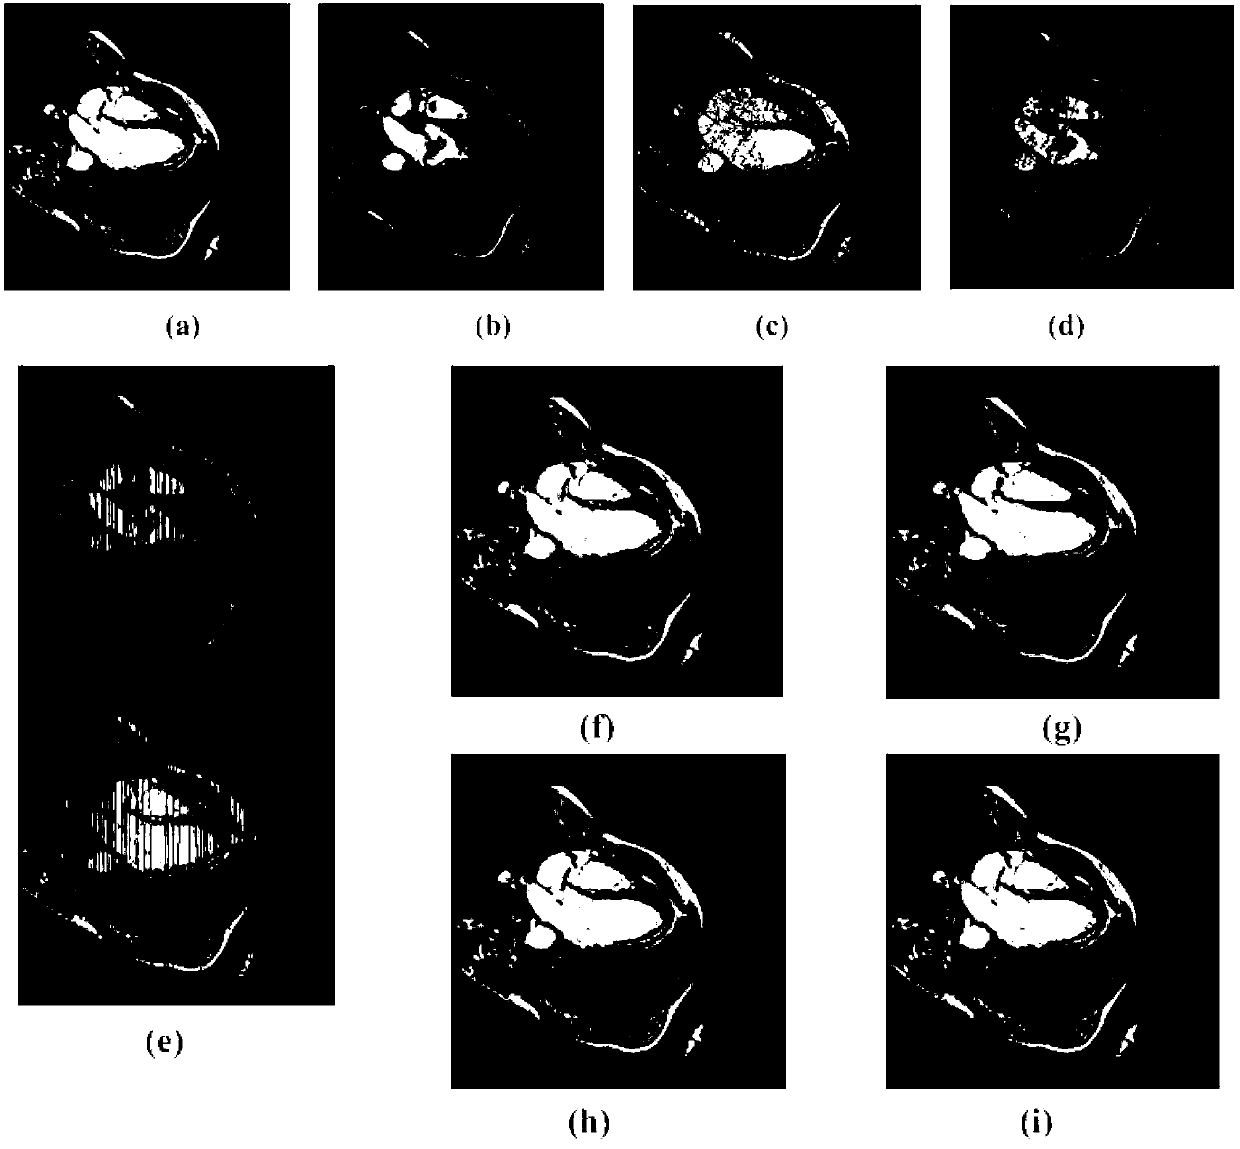 Non-rigid heart image grading and registering method based on optical flow field model